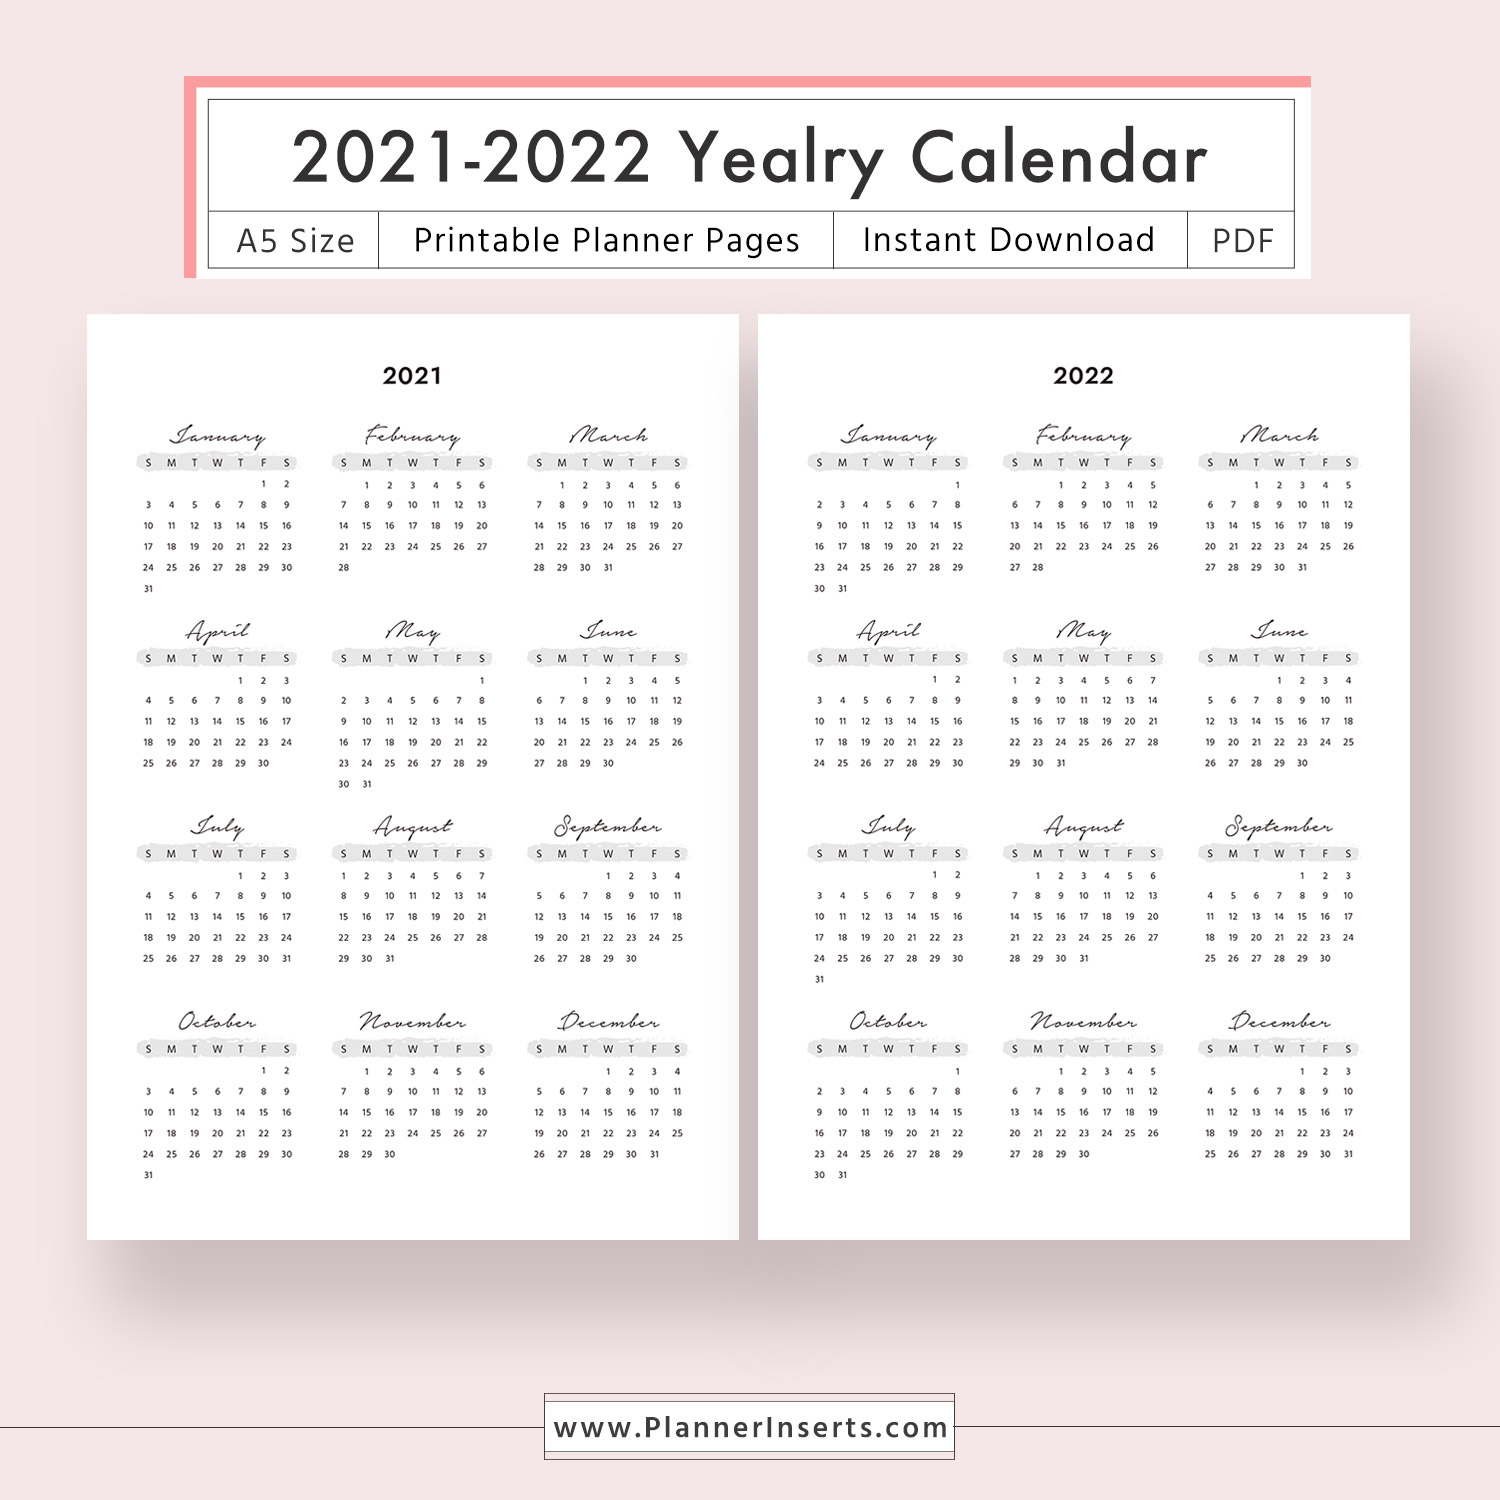 2021-2022 Calendar For Unlimited Instant Download